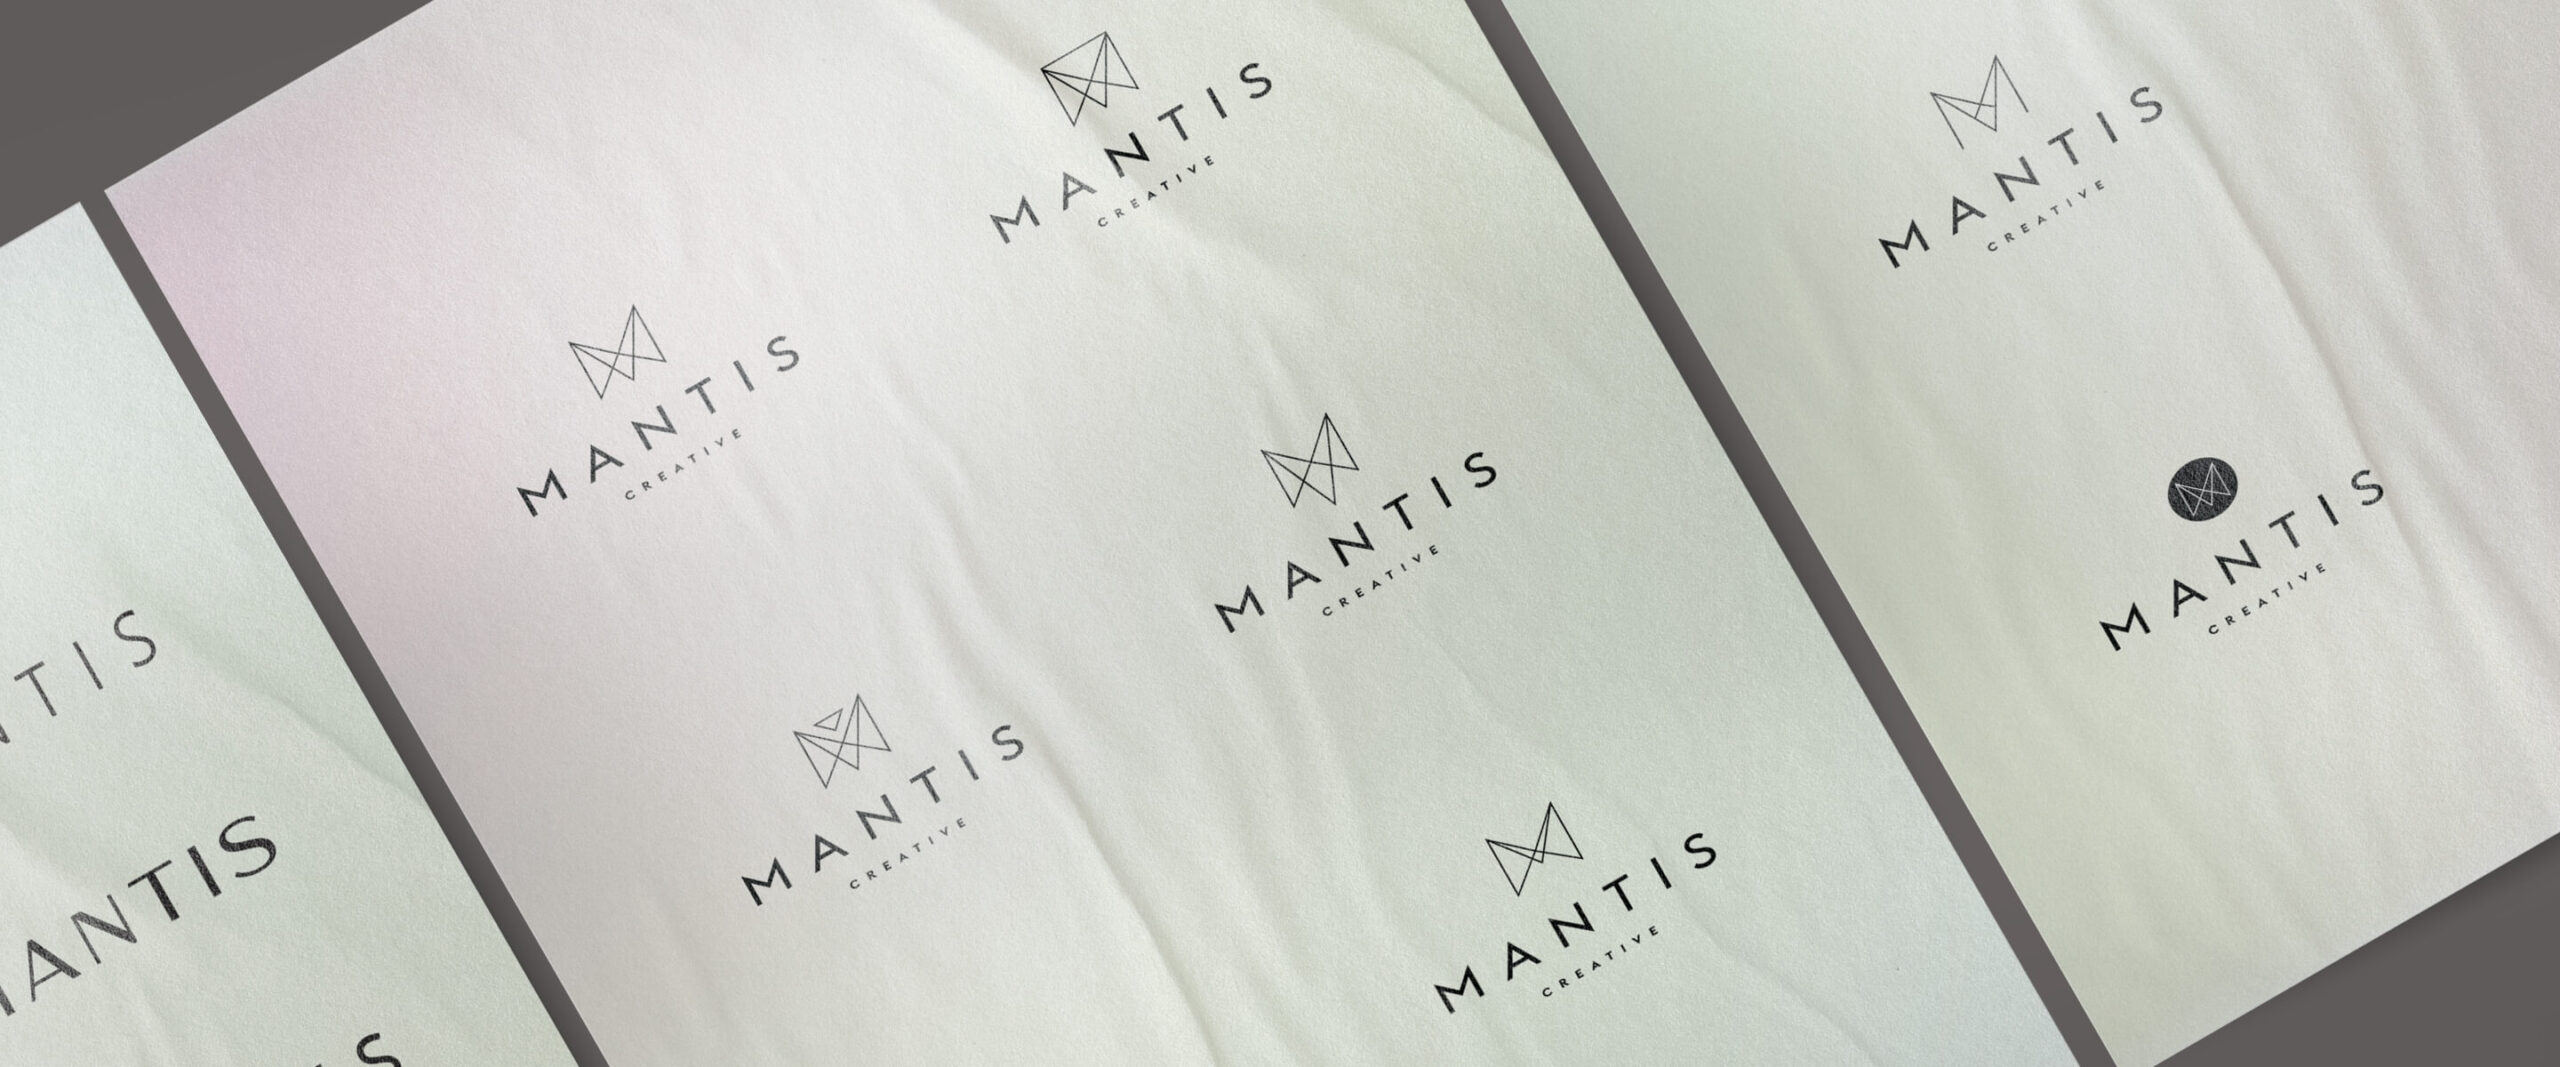 Image of Mantis Creative logo options